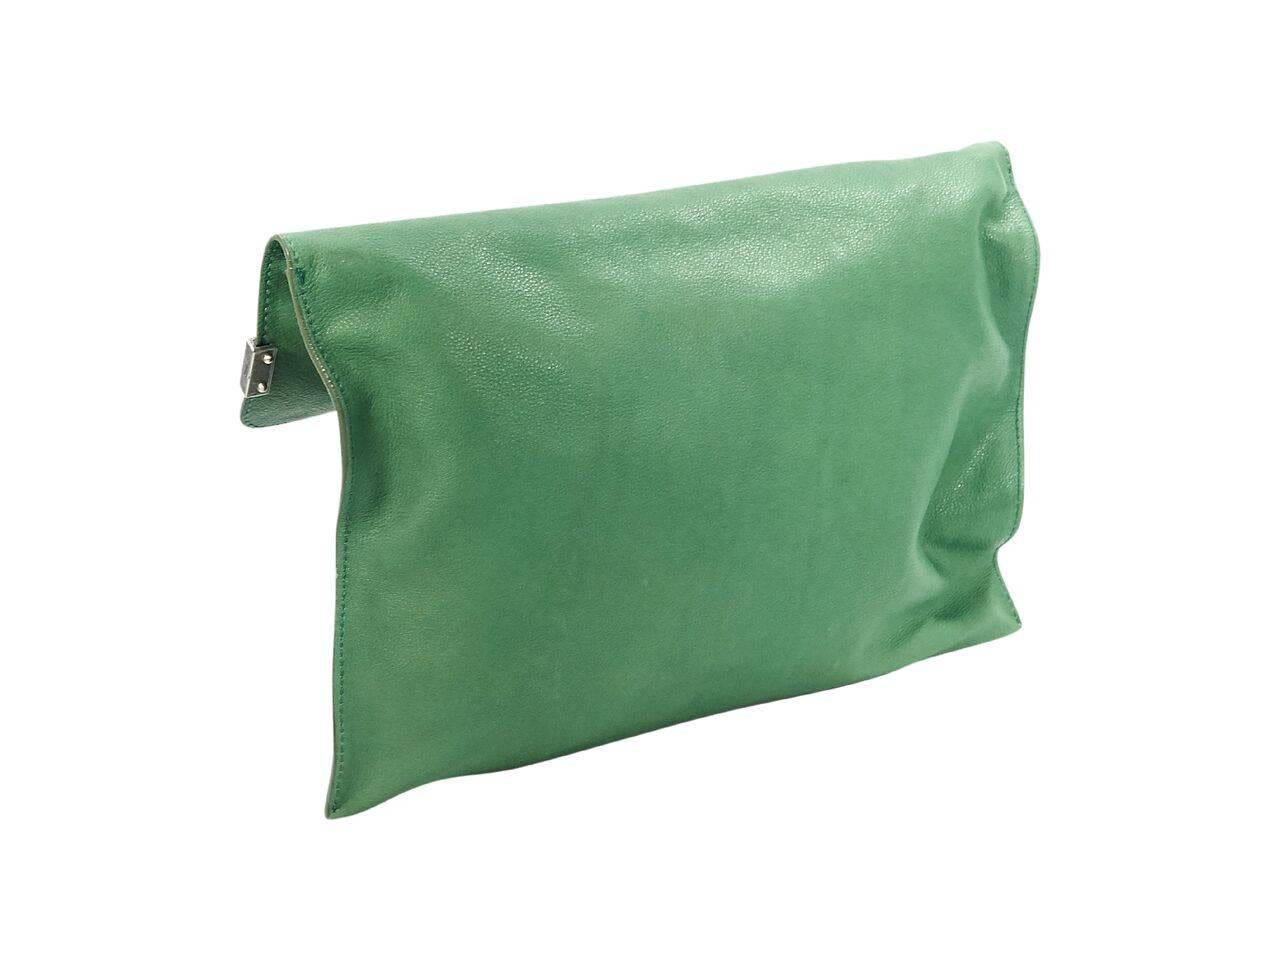 Product details:  Green pebbled leather foldover clutch by Stuart Wetizman.  Zip closure under front flap.  Silvertone hardware.  13.25